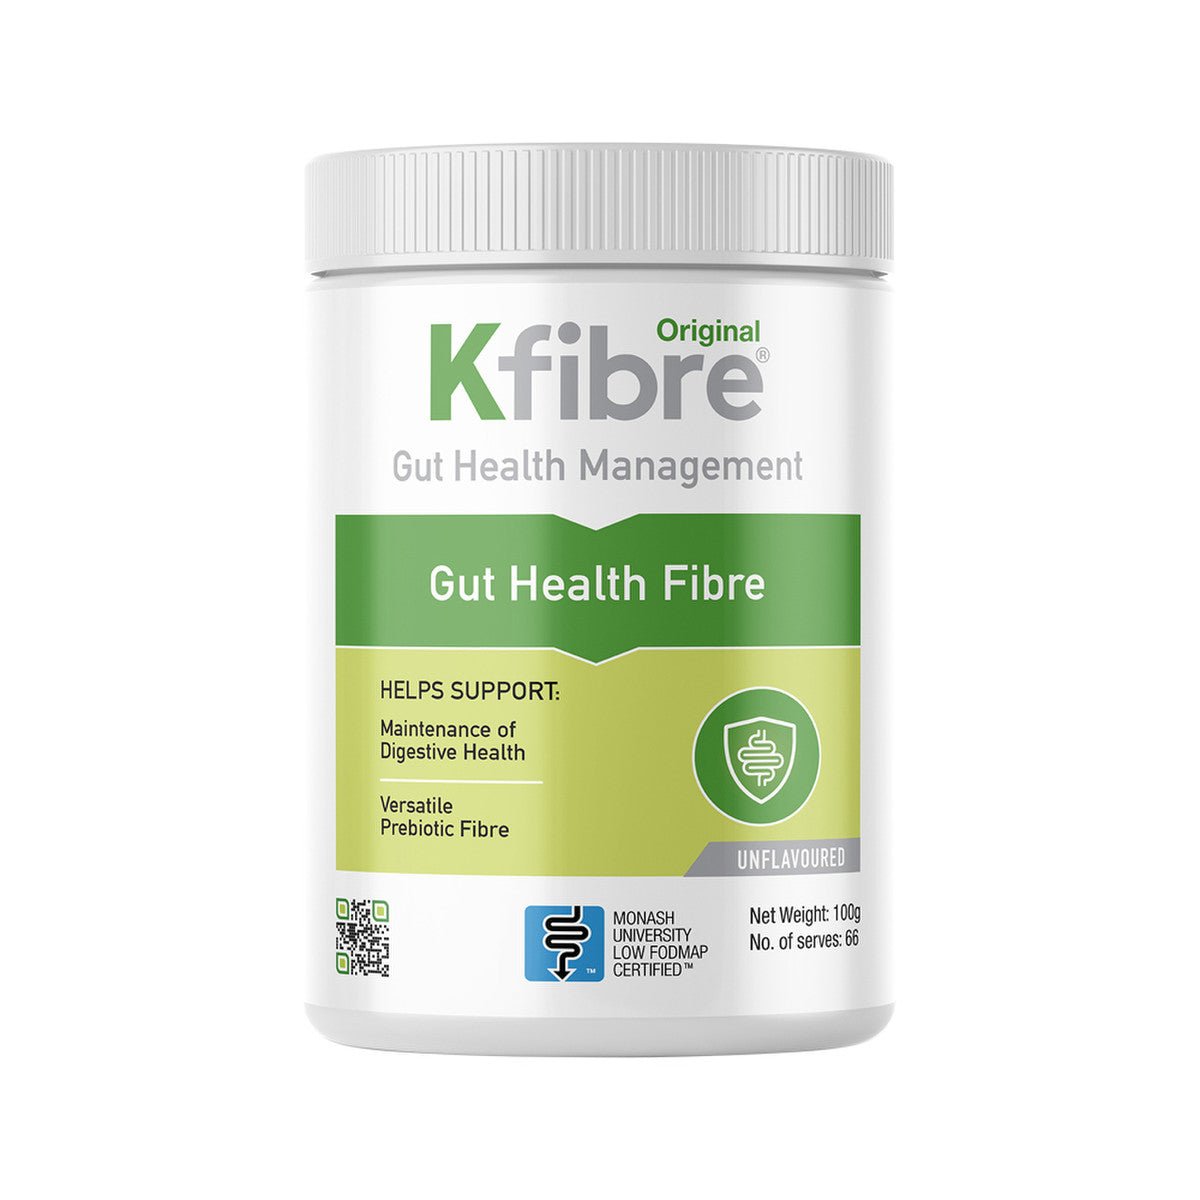 KFIBRE Original Gut Health Fibre Unflavoured Tub 100g - Dr Earth - Supplements